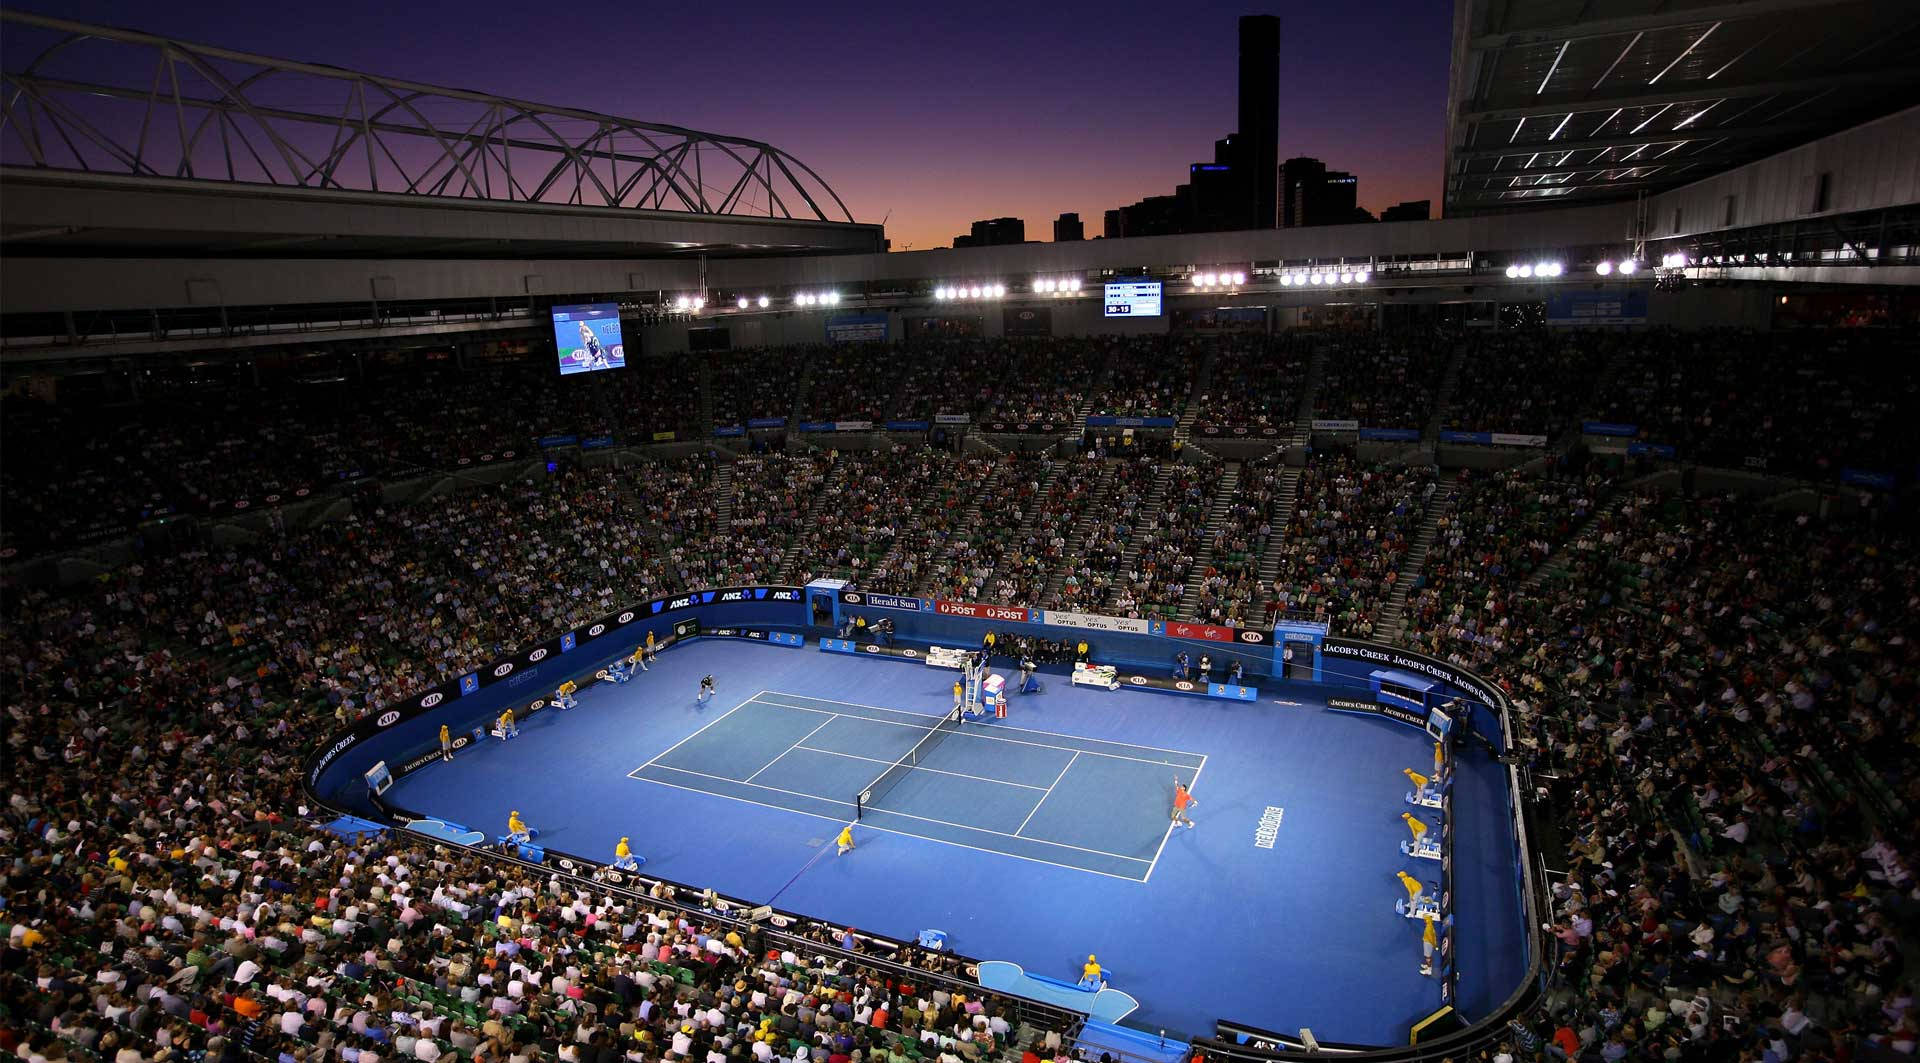 Australian Open Arena Aerial Photograph